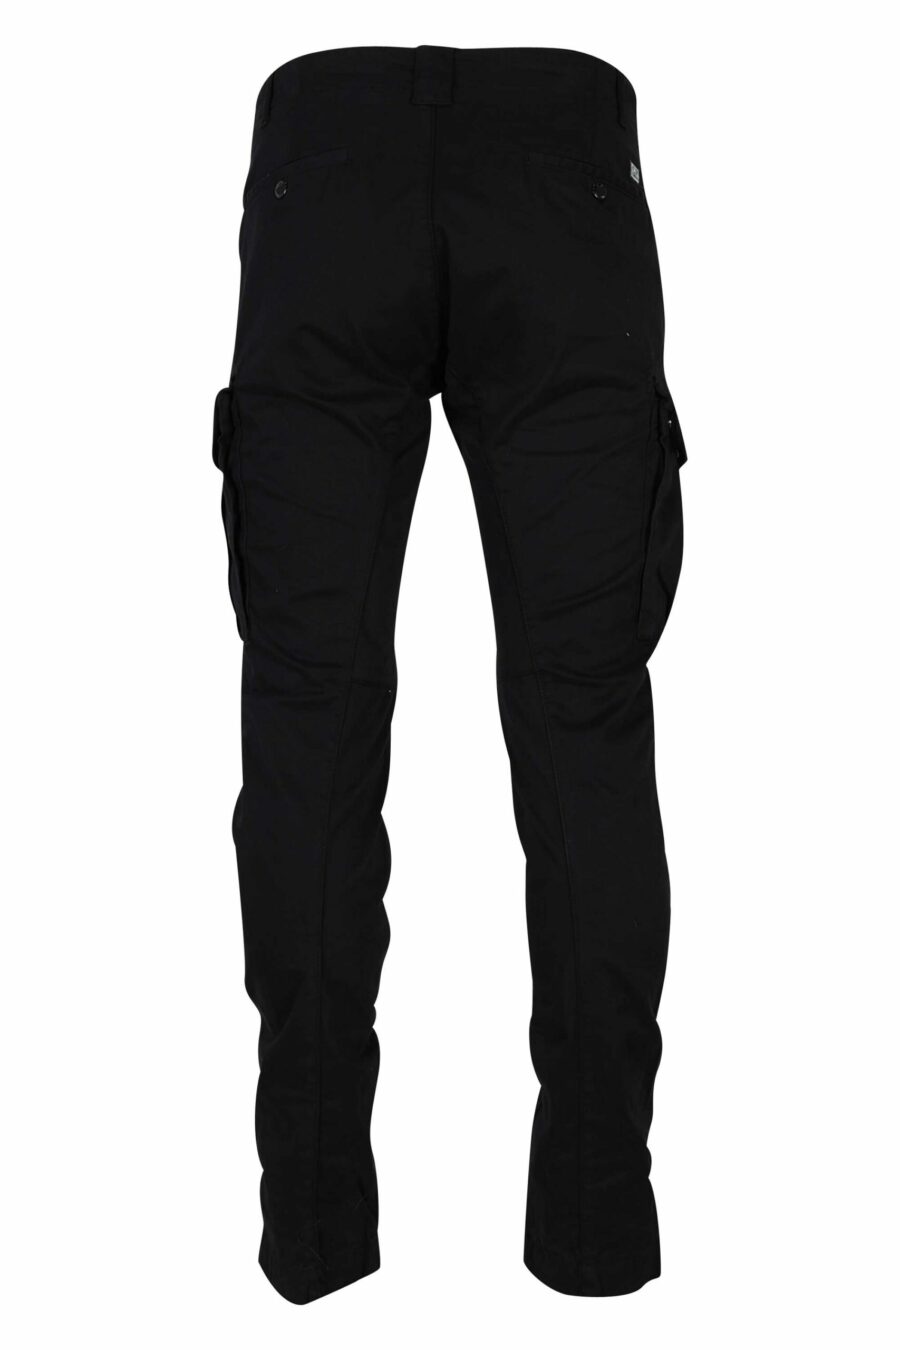 Pantalon cargo noir en satin stretch et lentille logo - 7620943597585 2 1 scaled